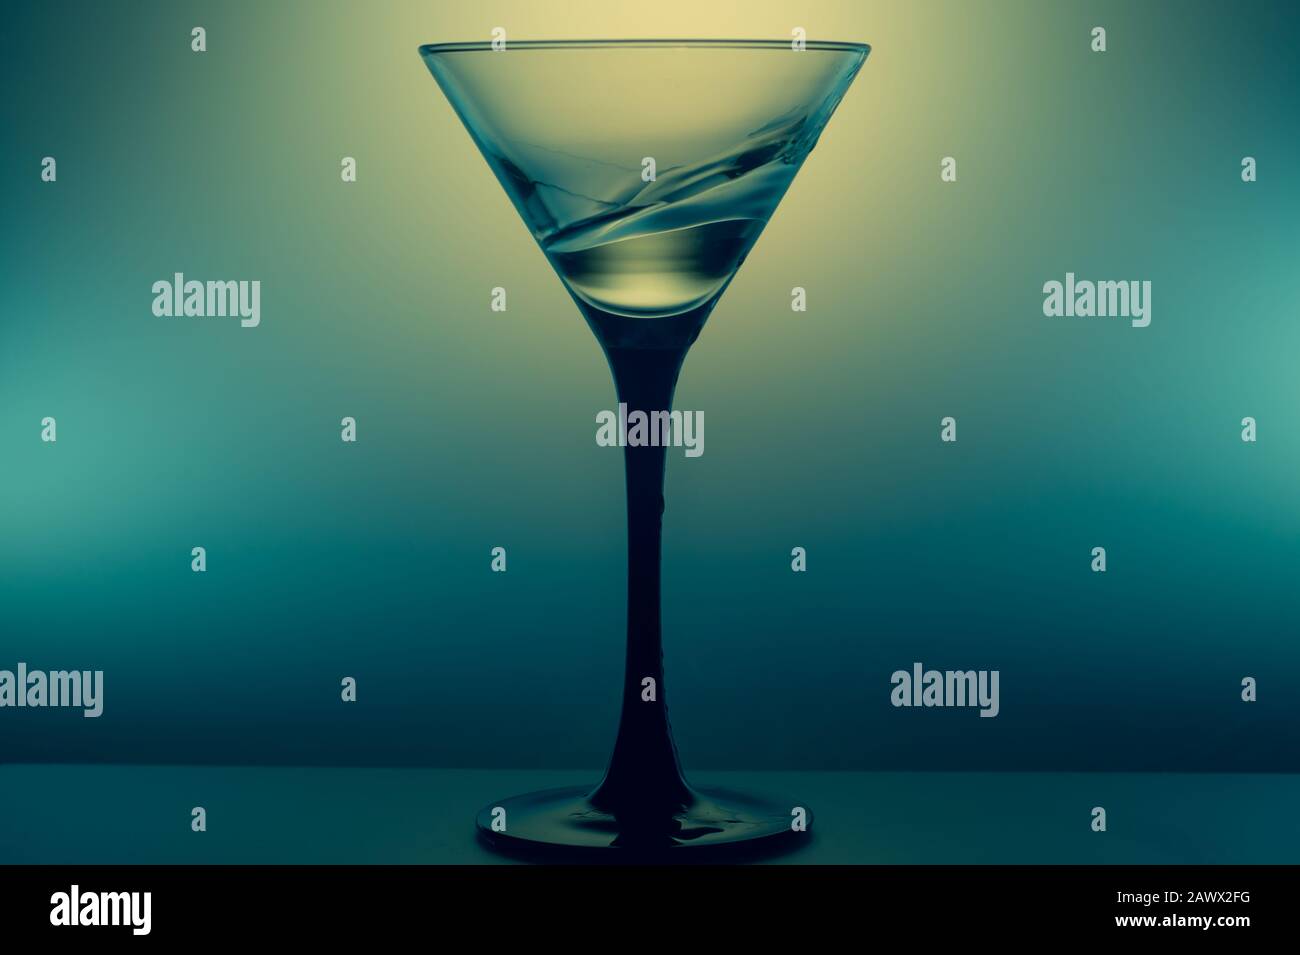 https://c8.alamy.com/comp/2AWX2FG/martini-glass-with-water-splash-on-glowing-background-transparent-cocktail-2AWX2FG.jpg